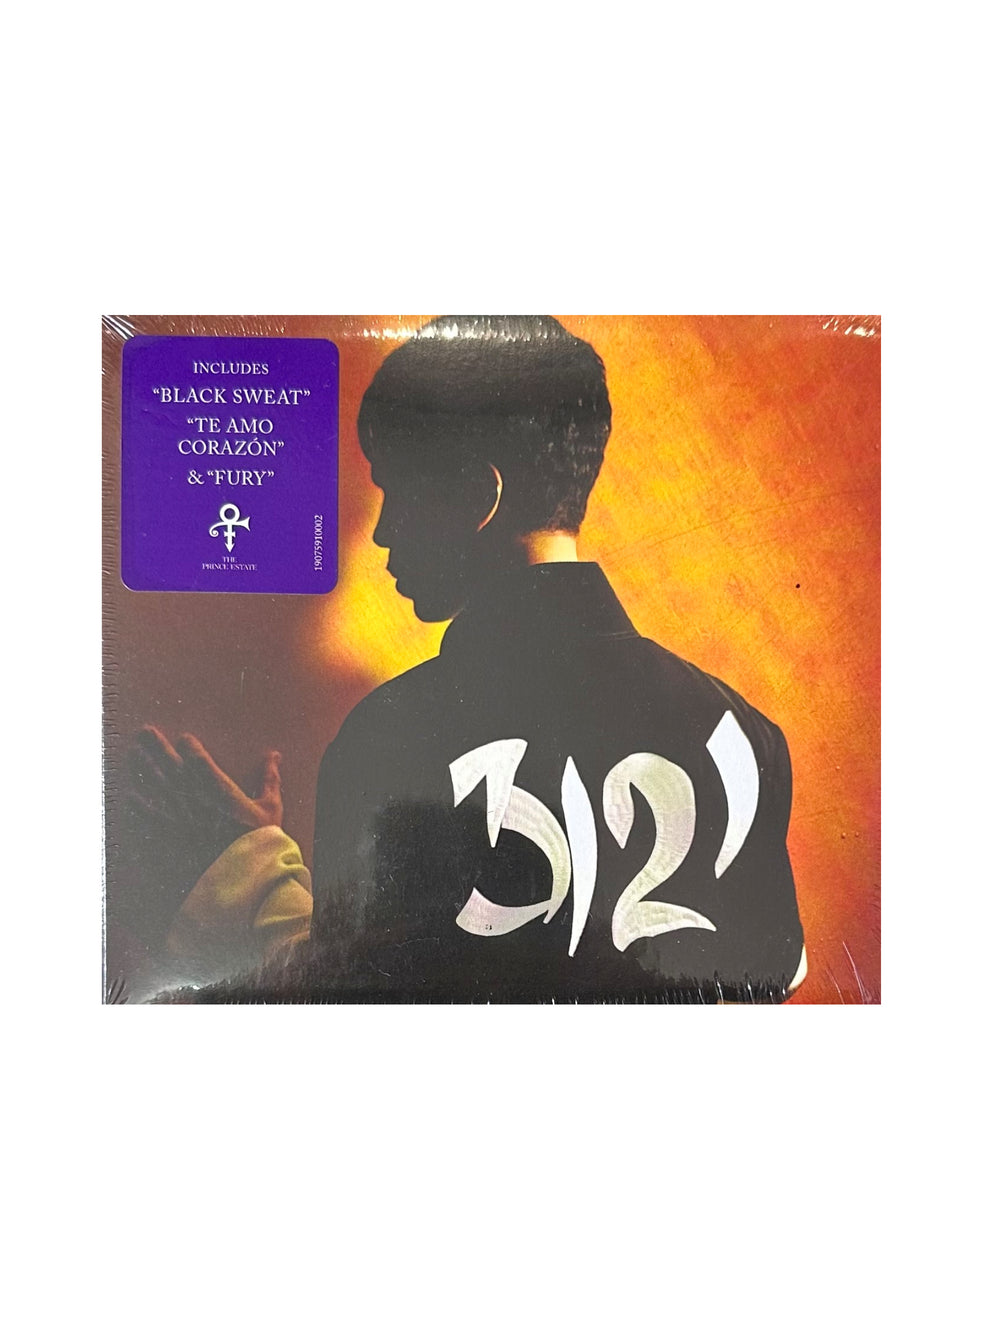 Prince –  3121 CD Album Reissue Digipak Sony Legacy Release NEW 2019